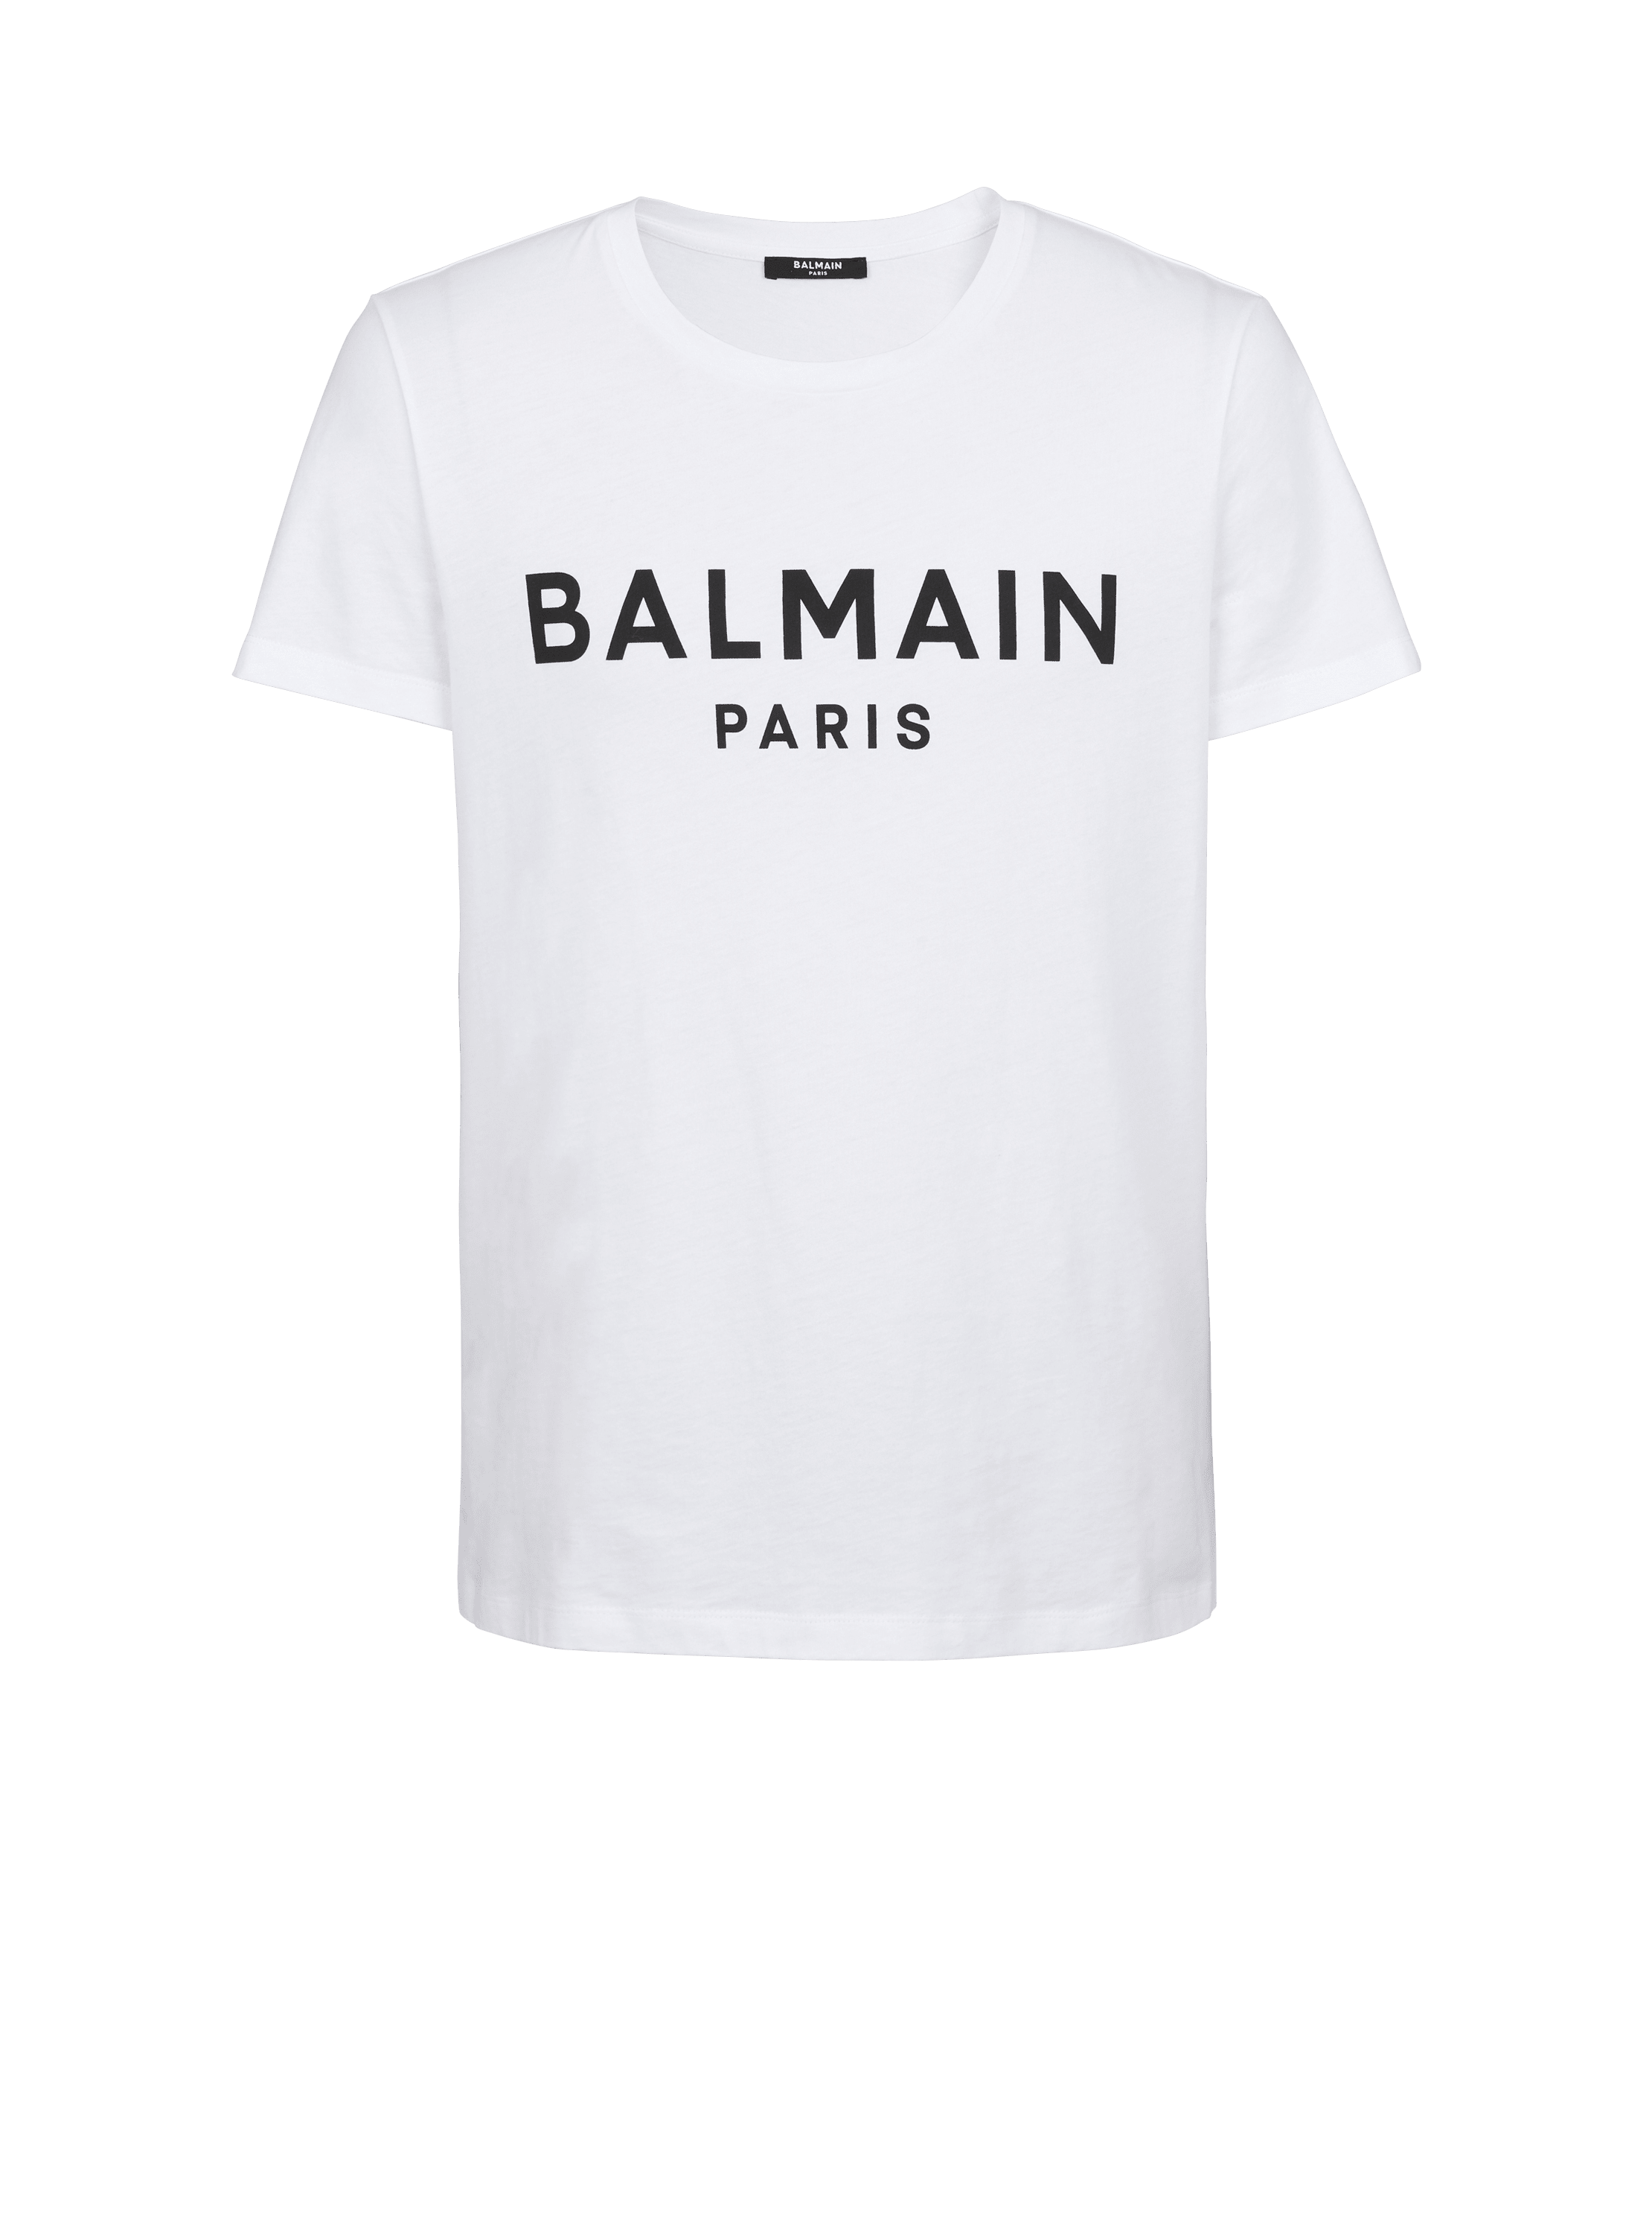 Balmain Paris T-shirt, white, hi-res